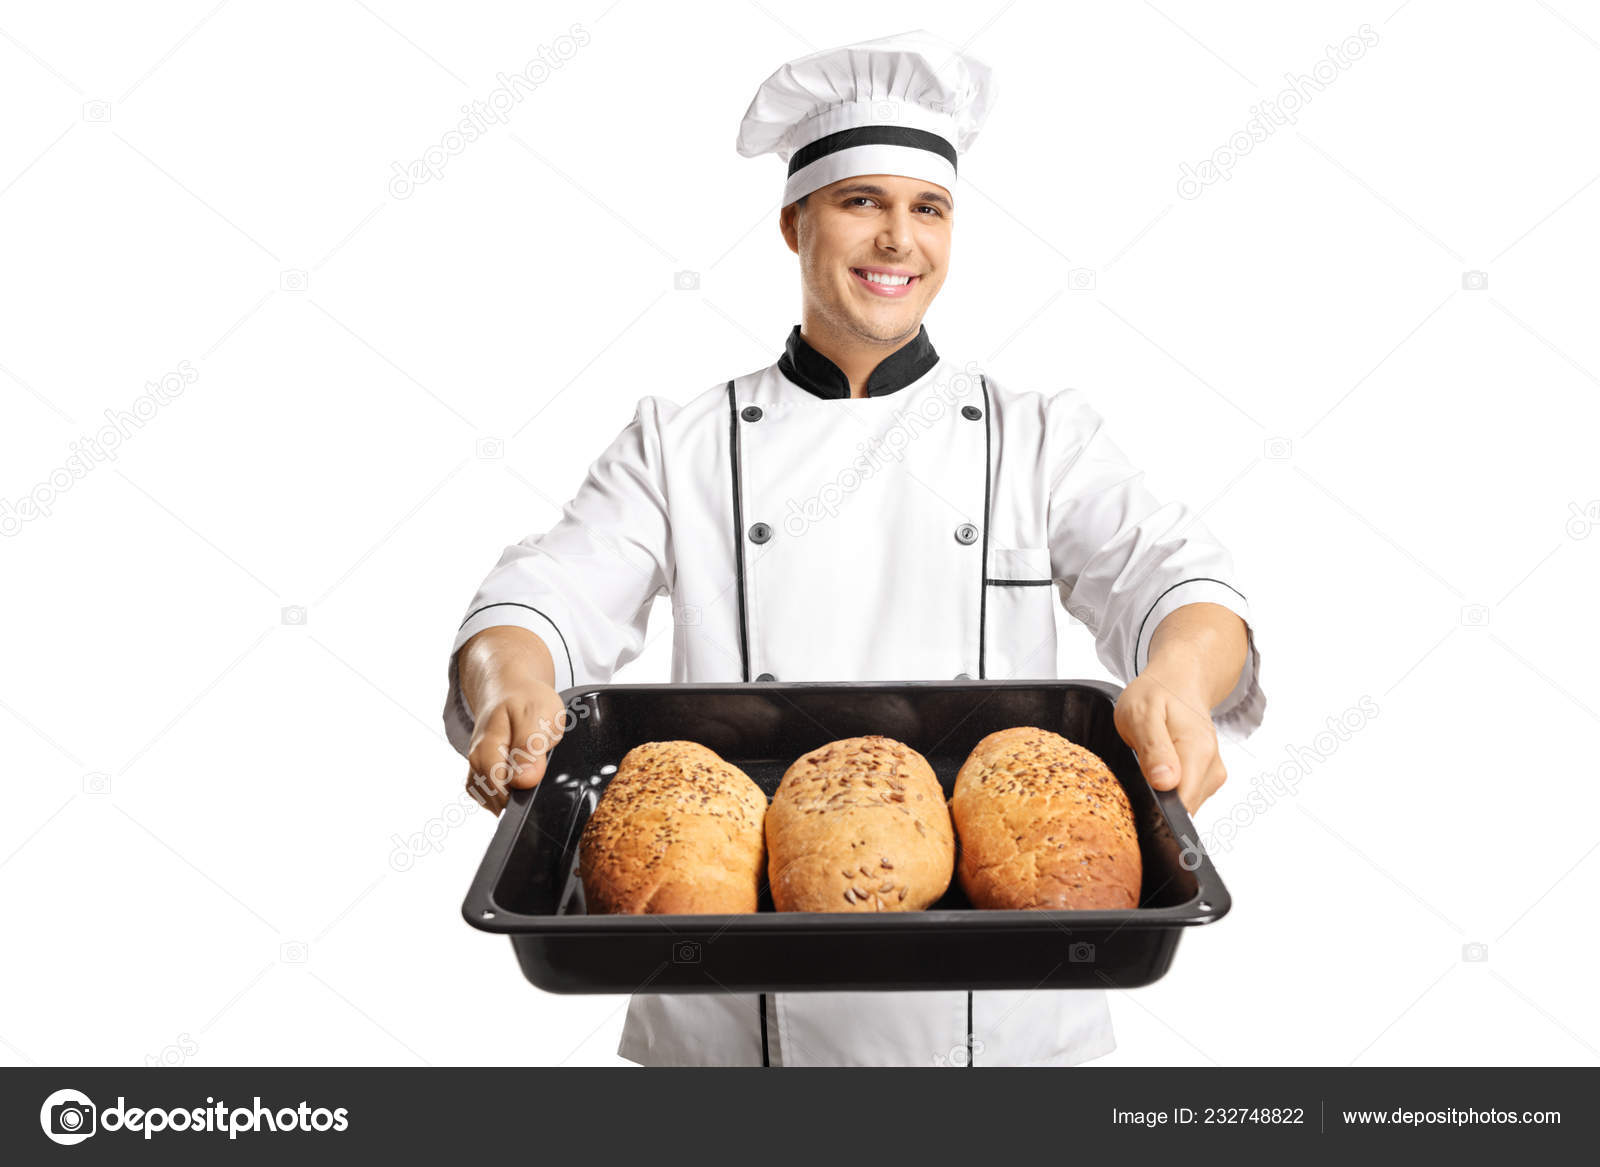 https://st4.depositphotos.com/3332767/23274/i/1600/depositphotos_232748822-stock-photo-young-cheerful-baker-holding-tray.jpg